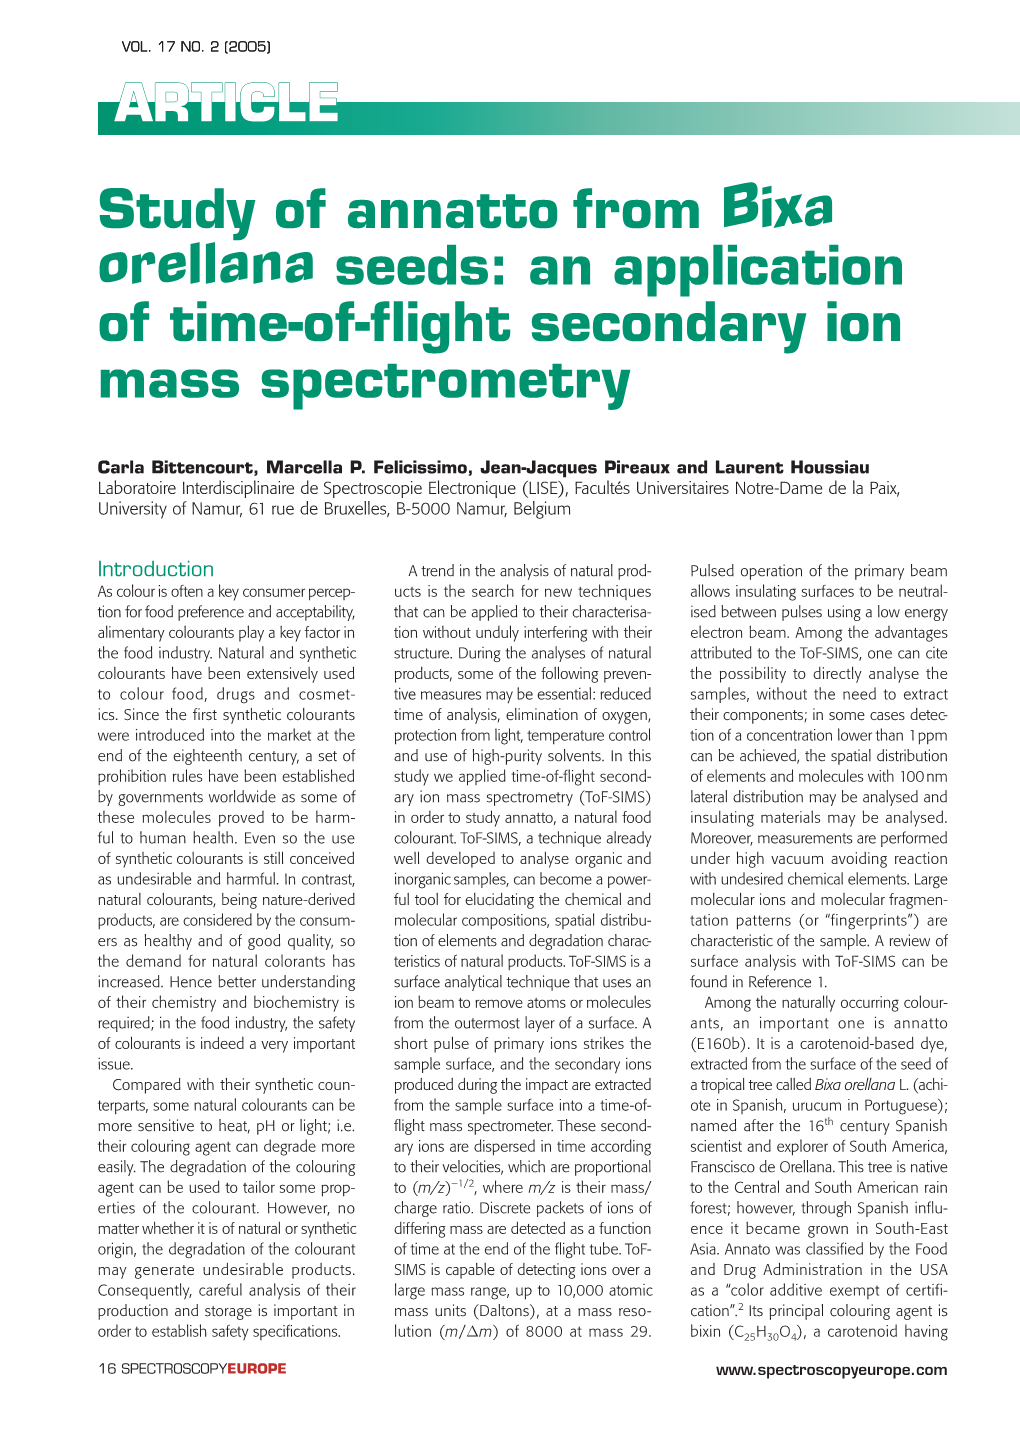 Study of Annatto from Bixa Orellana Seeds: an Application of Time-Of-Flight Secondary Ion Mass Spectrometry